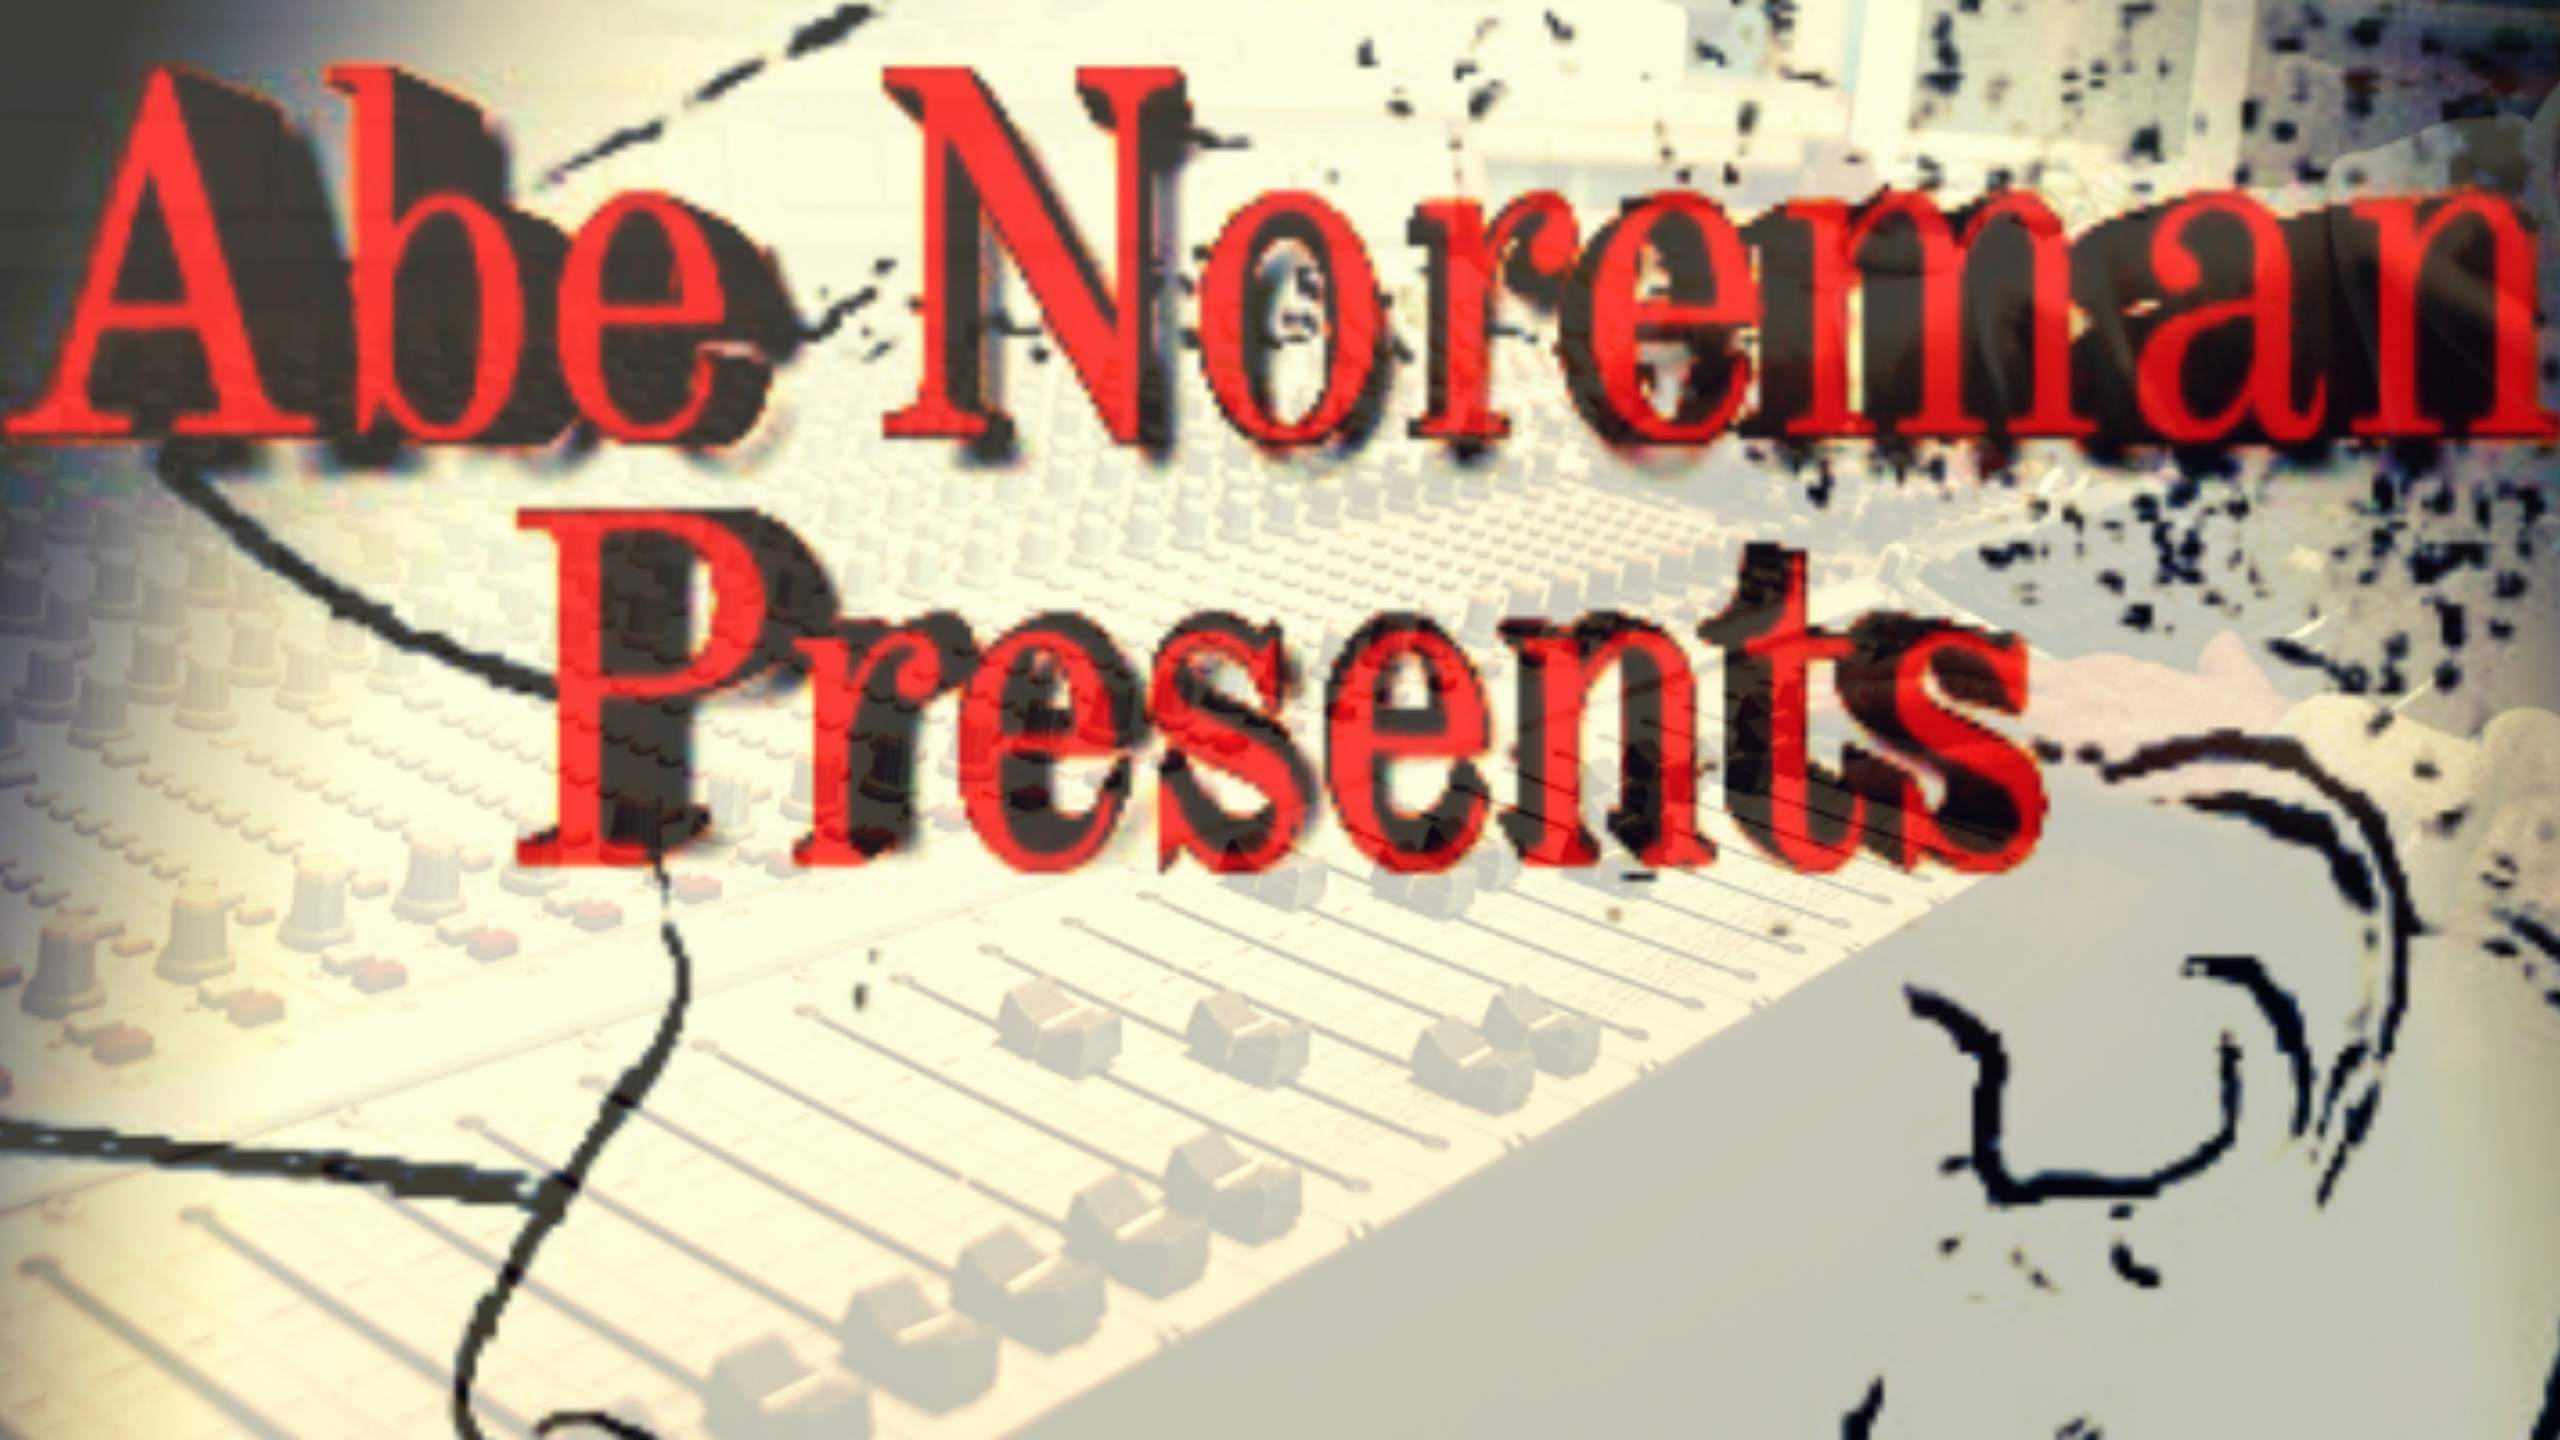 Abe Noreman Presents